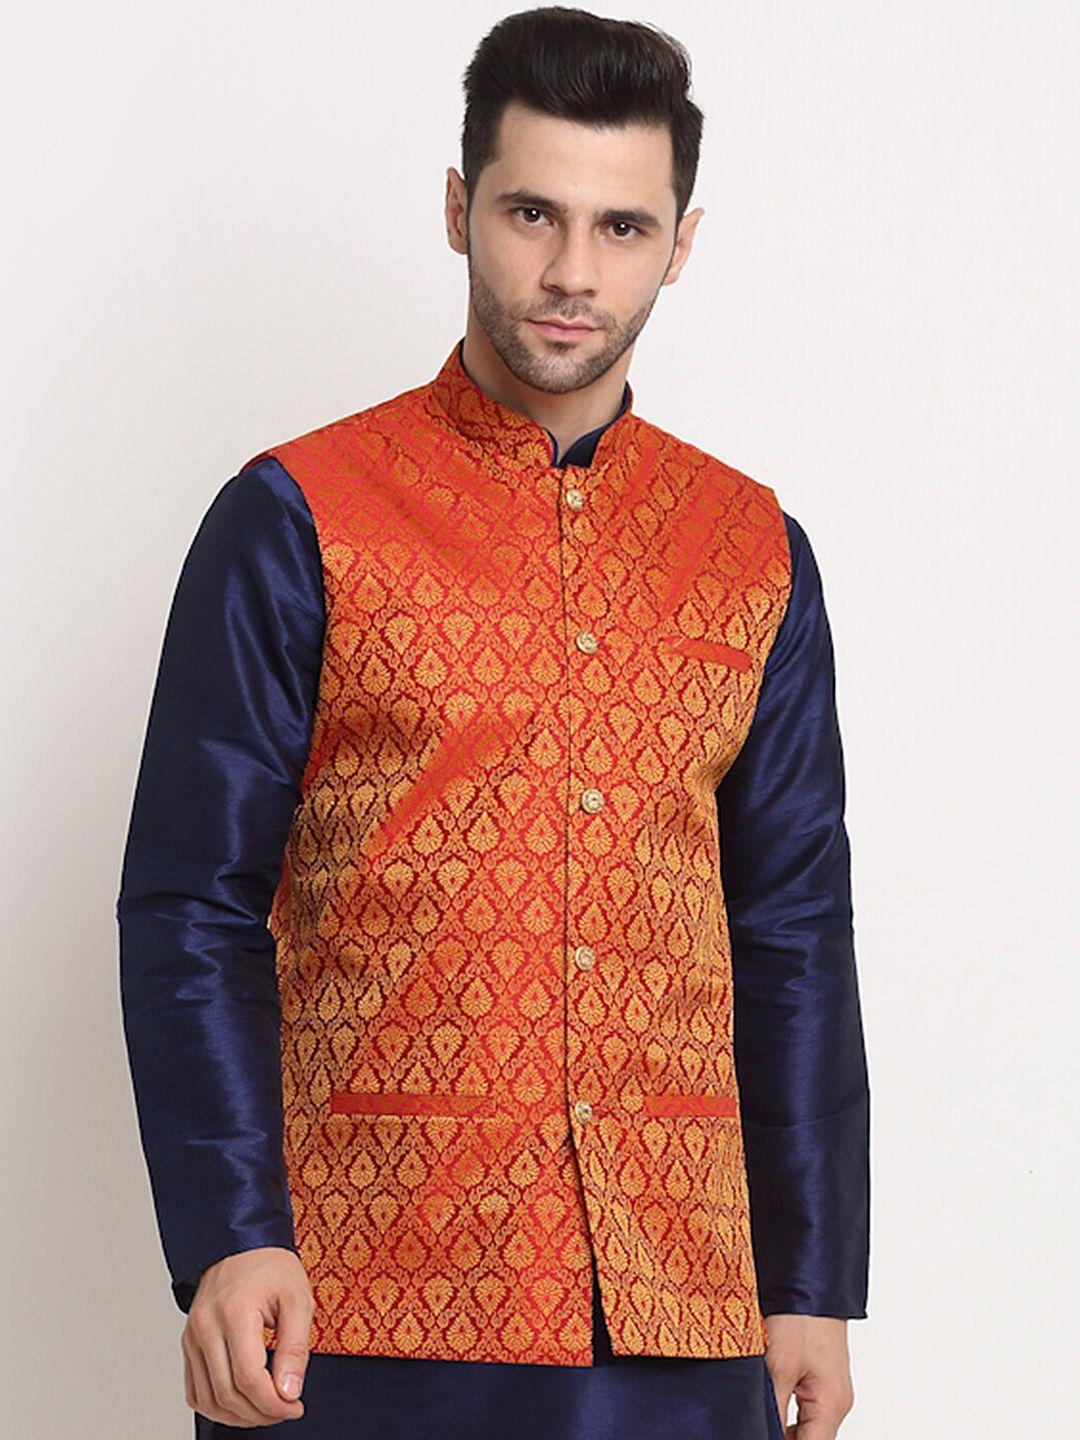 kraft-india-men-red-&-gold-toned-ethnic-motifs-jacquard-nehru-jacket